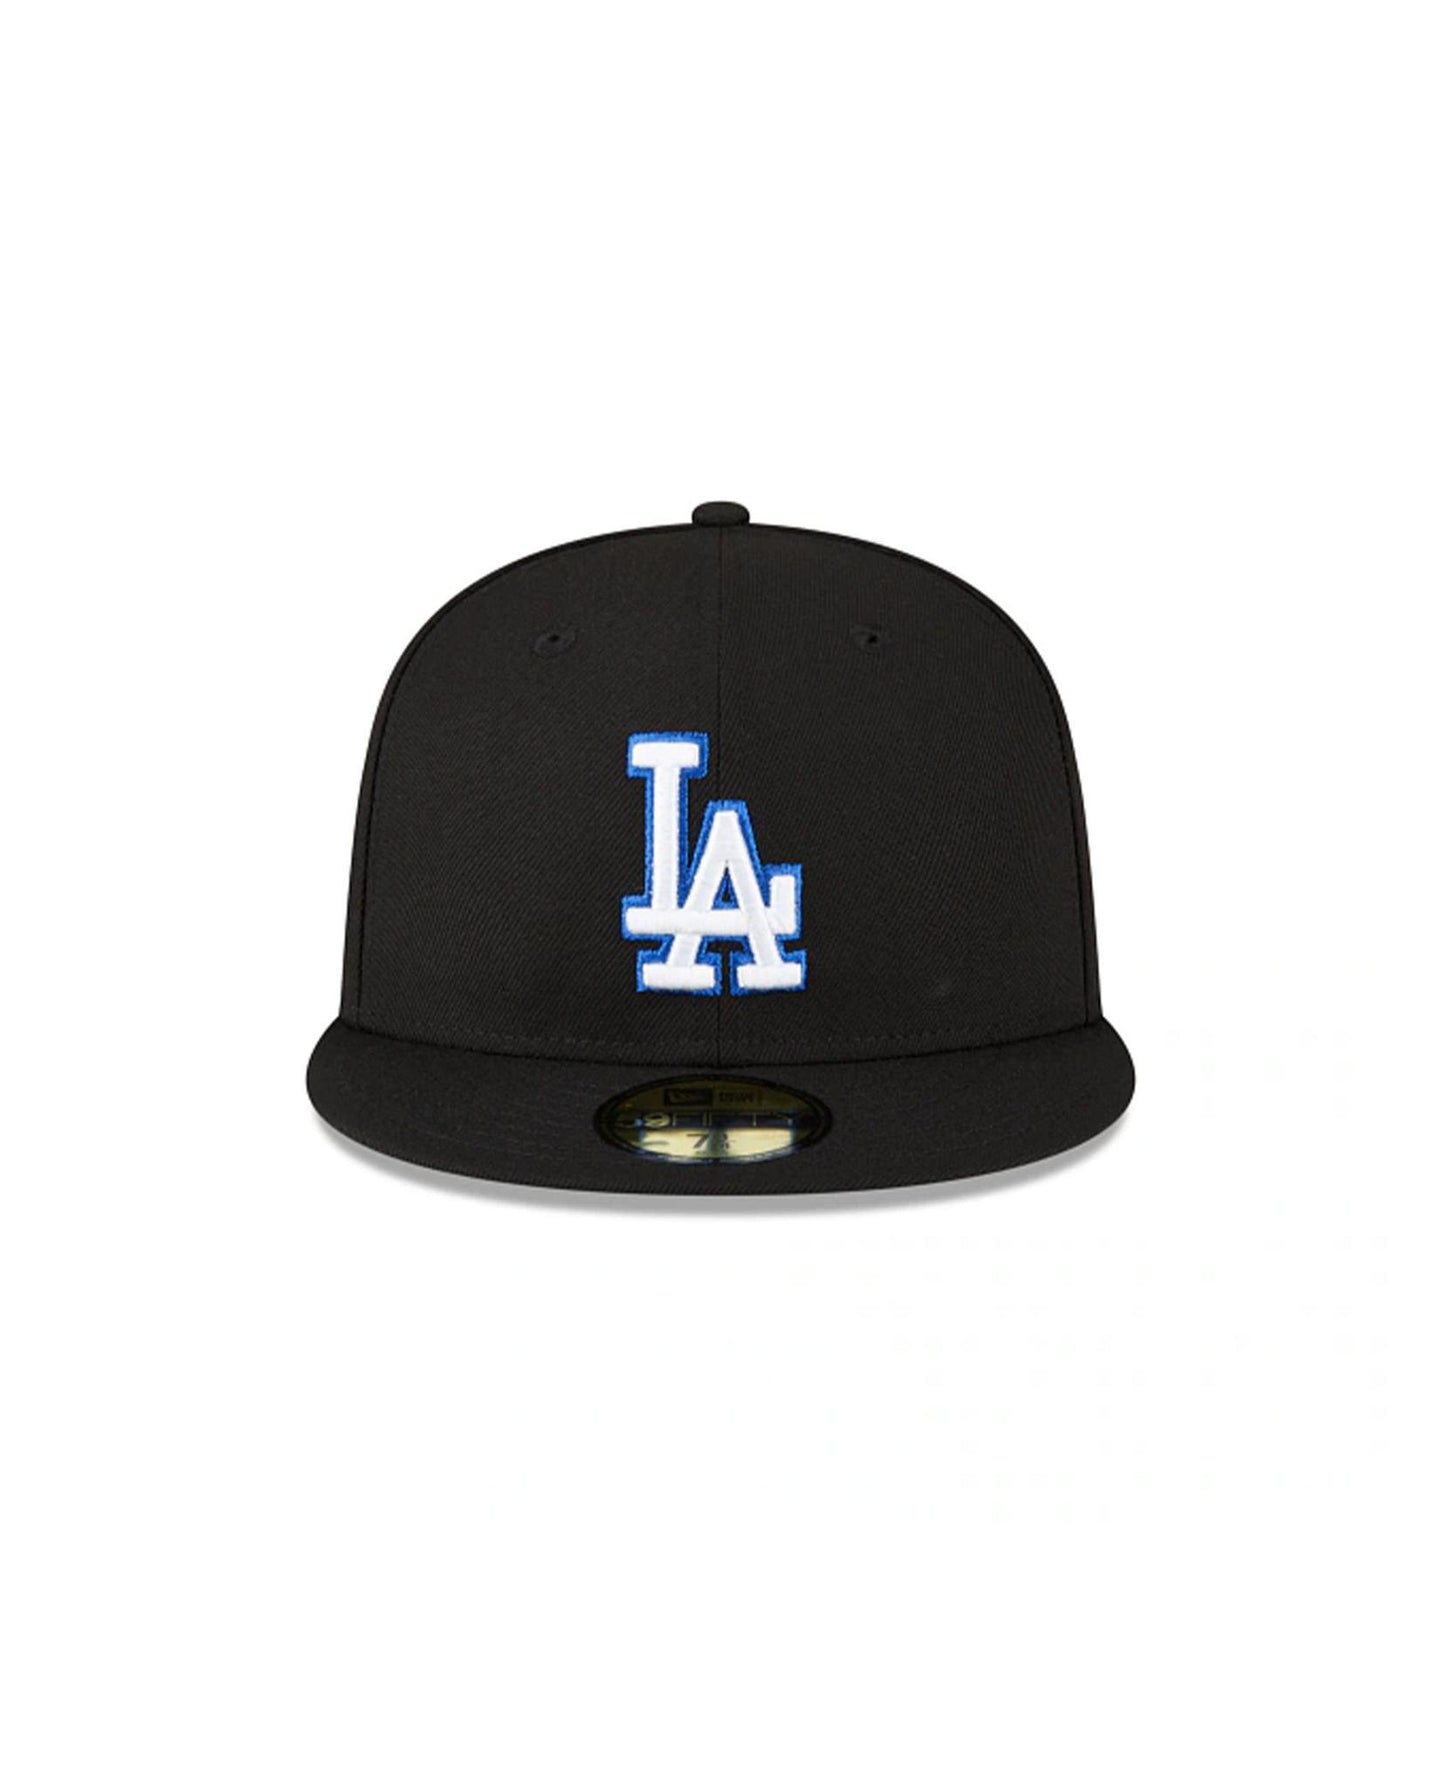 New Era Boys New Era MLB Los Angeles Dodgers 9FIFTY Cap Blue 1 Size